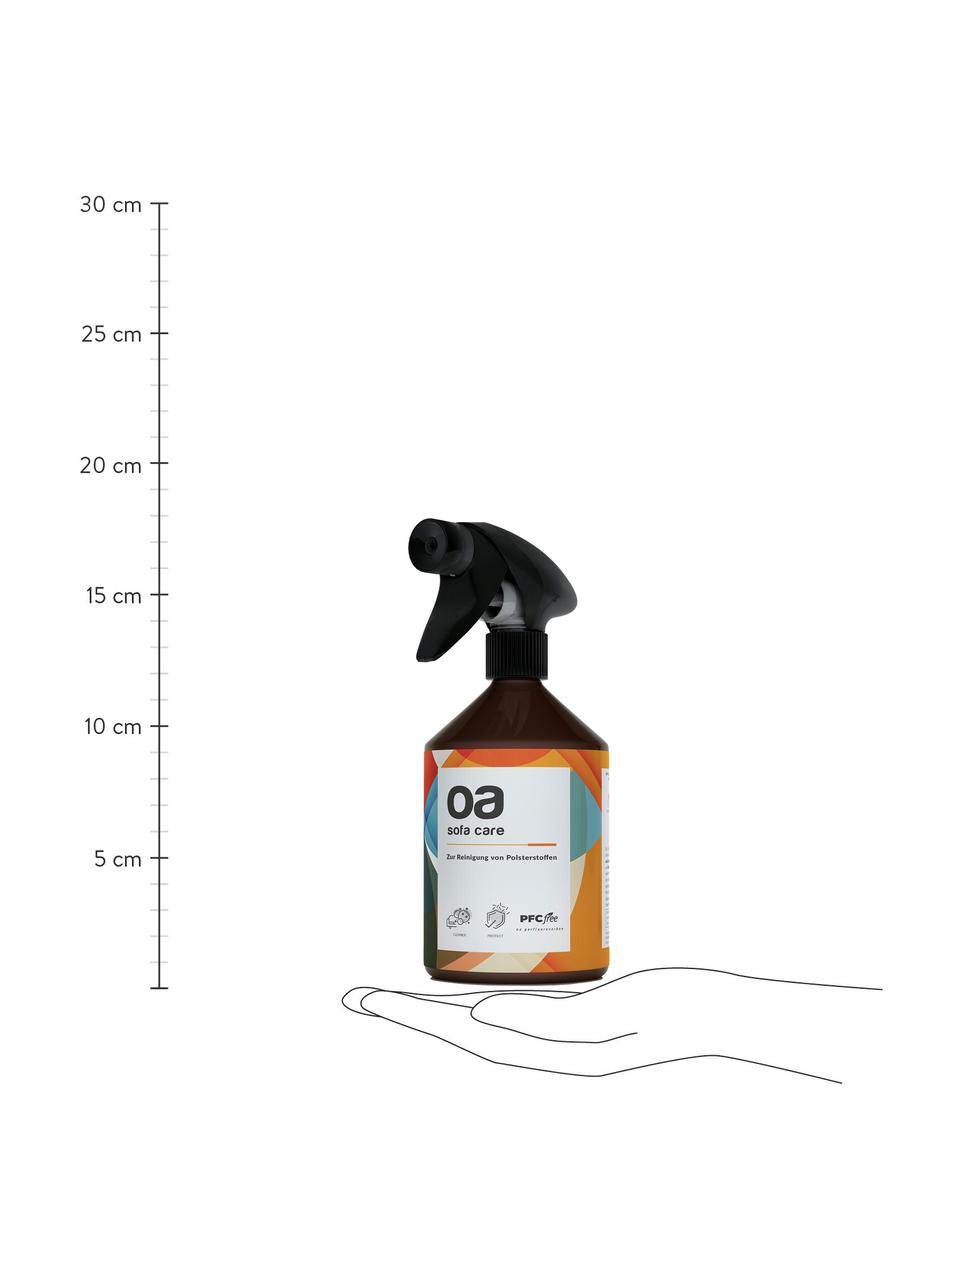 Detergente per tessuti Care, Privo di PFC
Privo di gas VOC
Vegano
Biodegradabile, Detergenti tessili, 500 ml